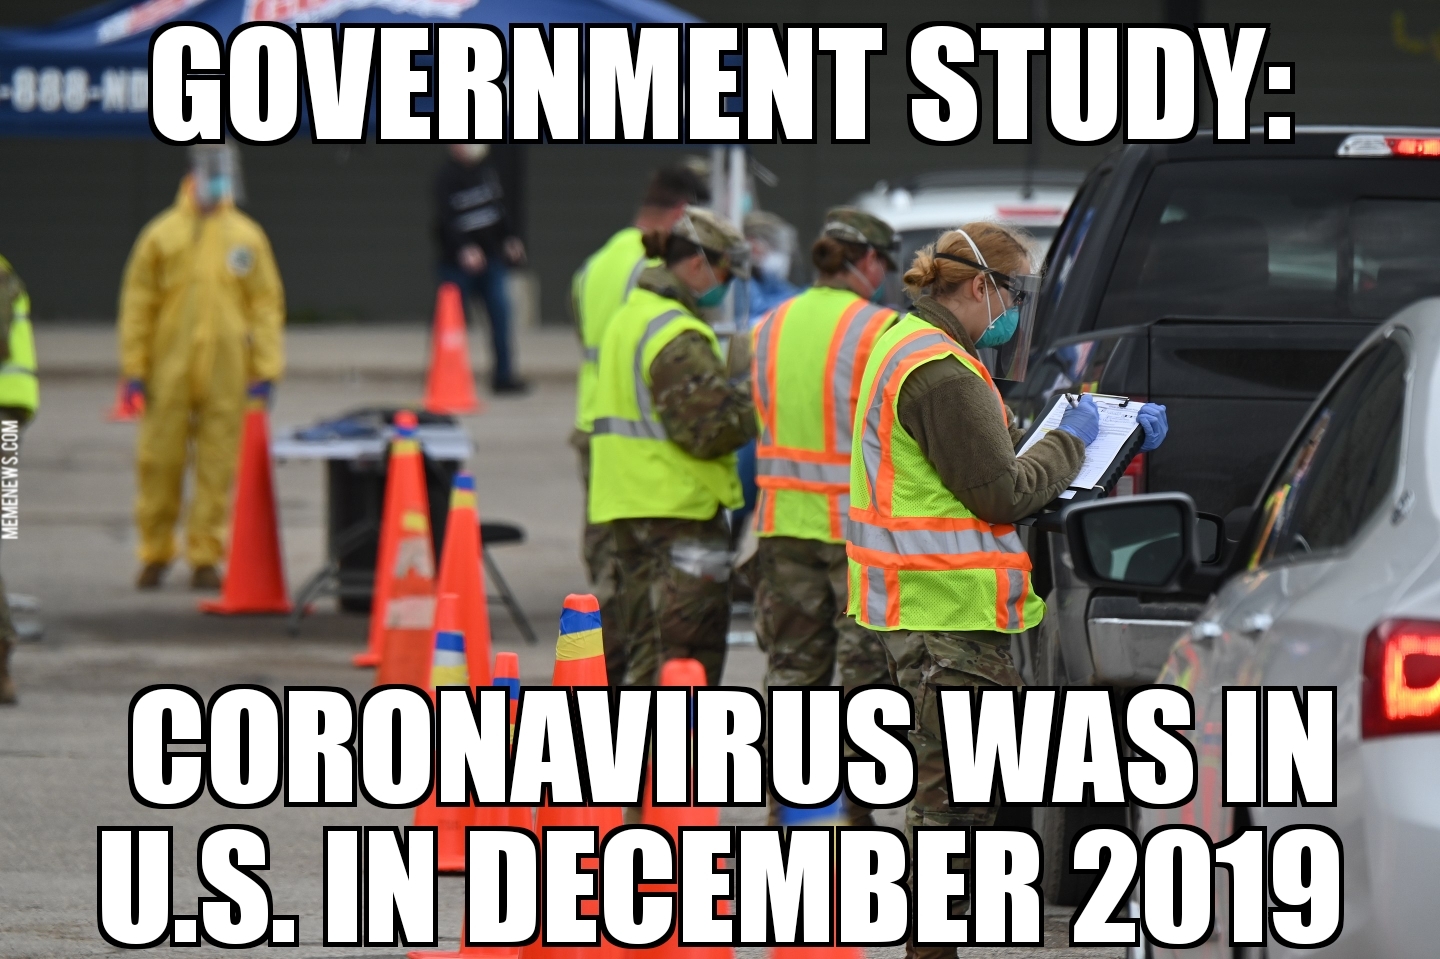 Coronavirus was in U.S. in December